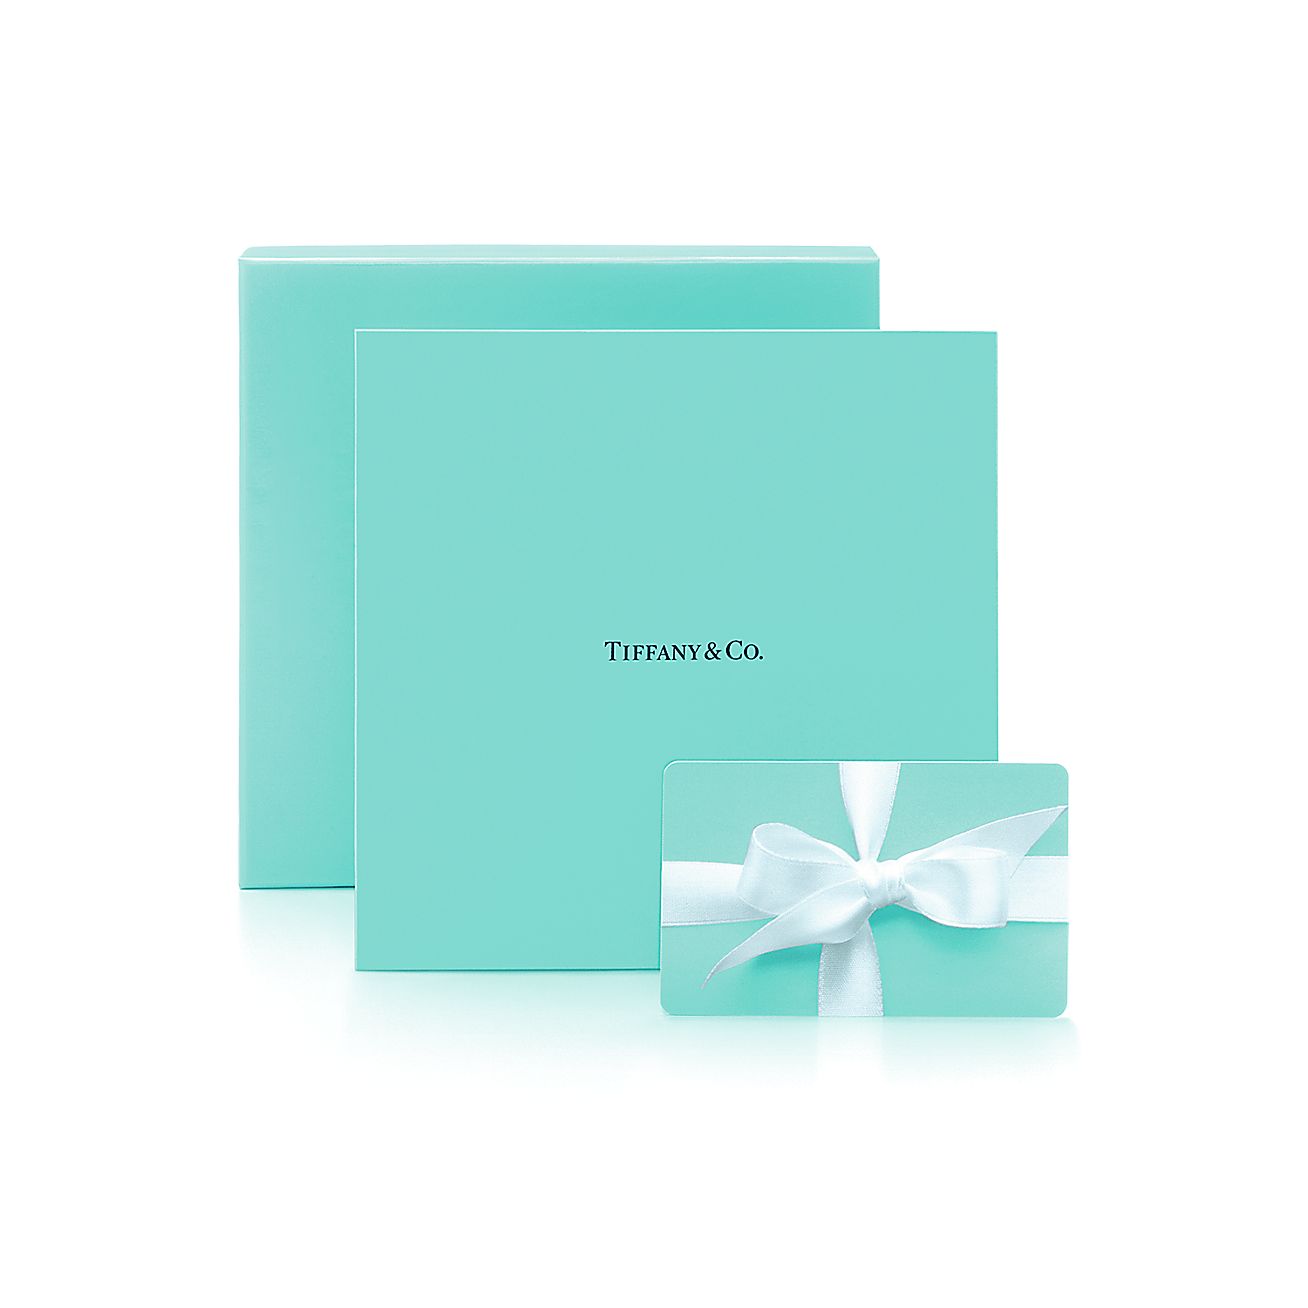 The Tiffany Gift Card